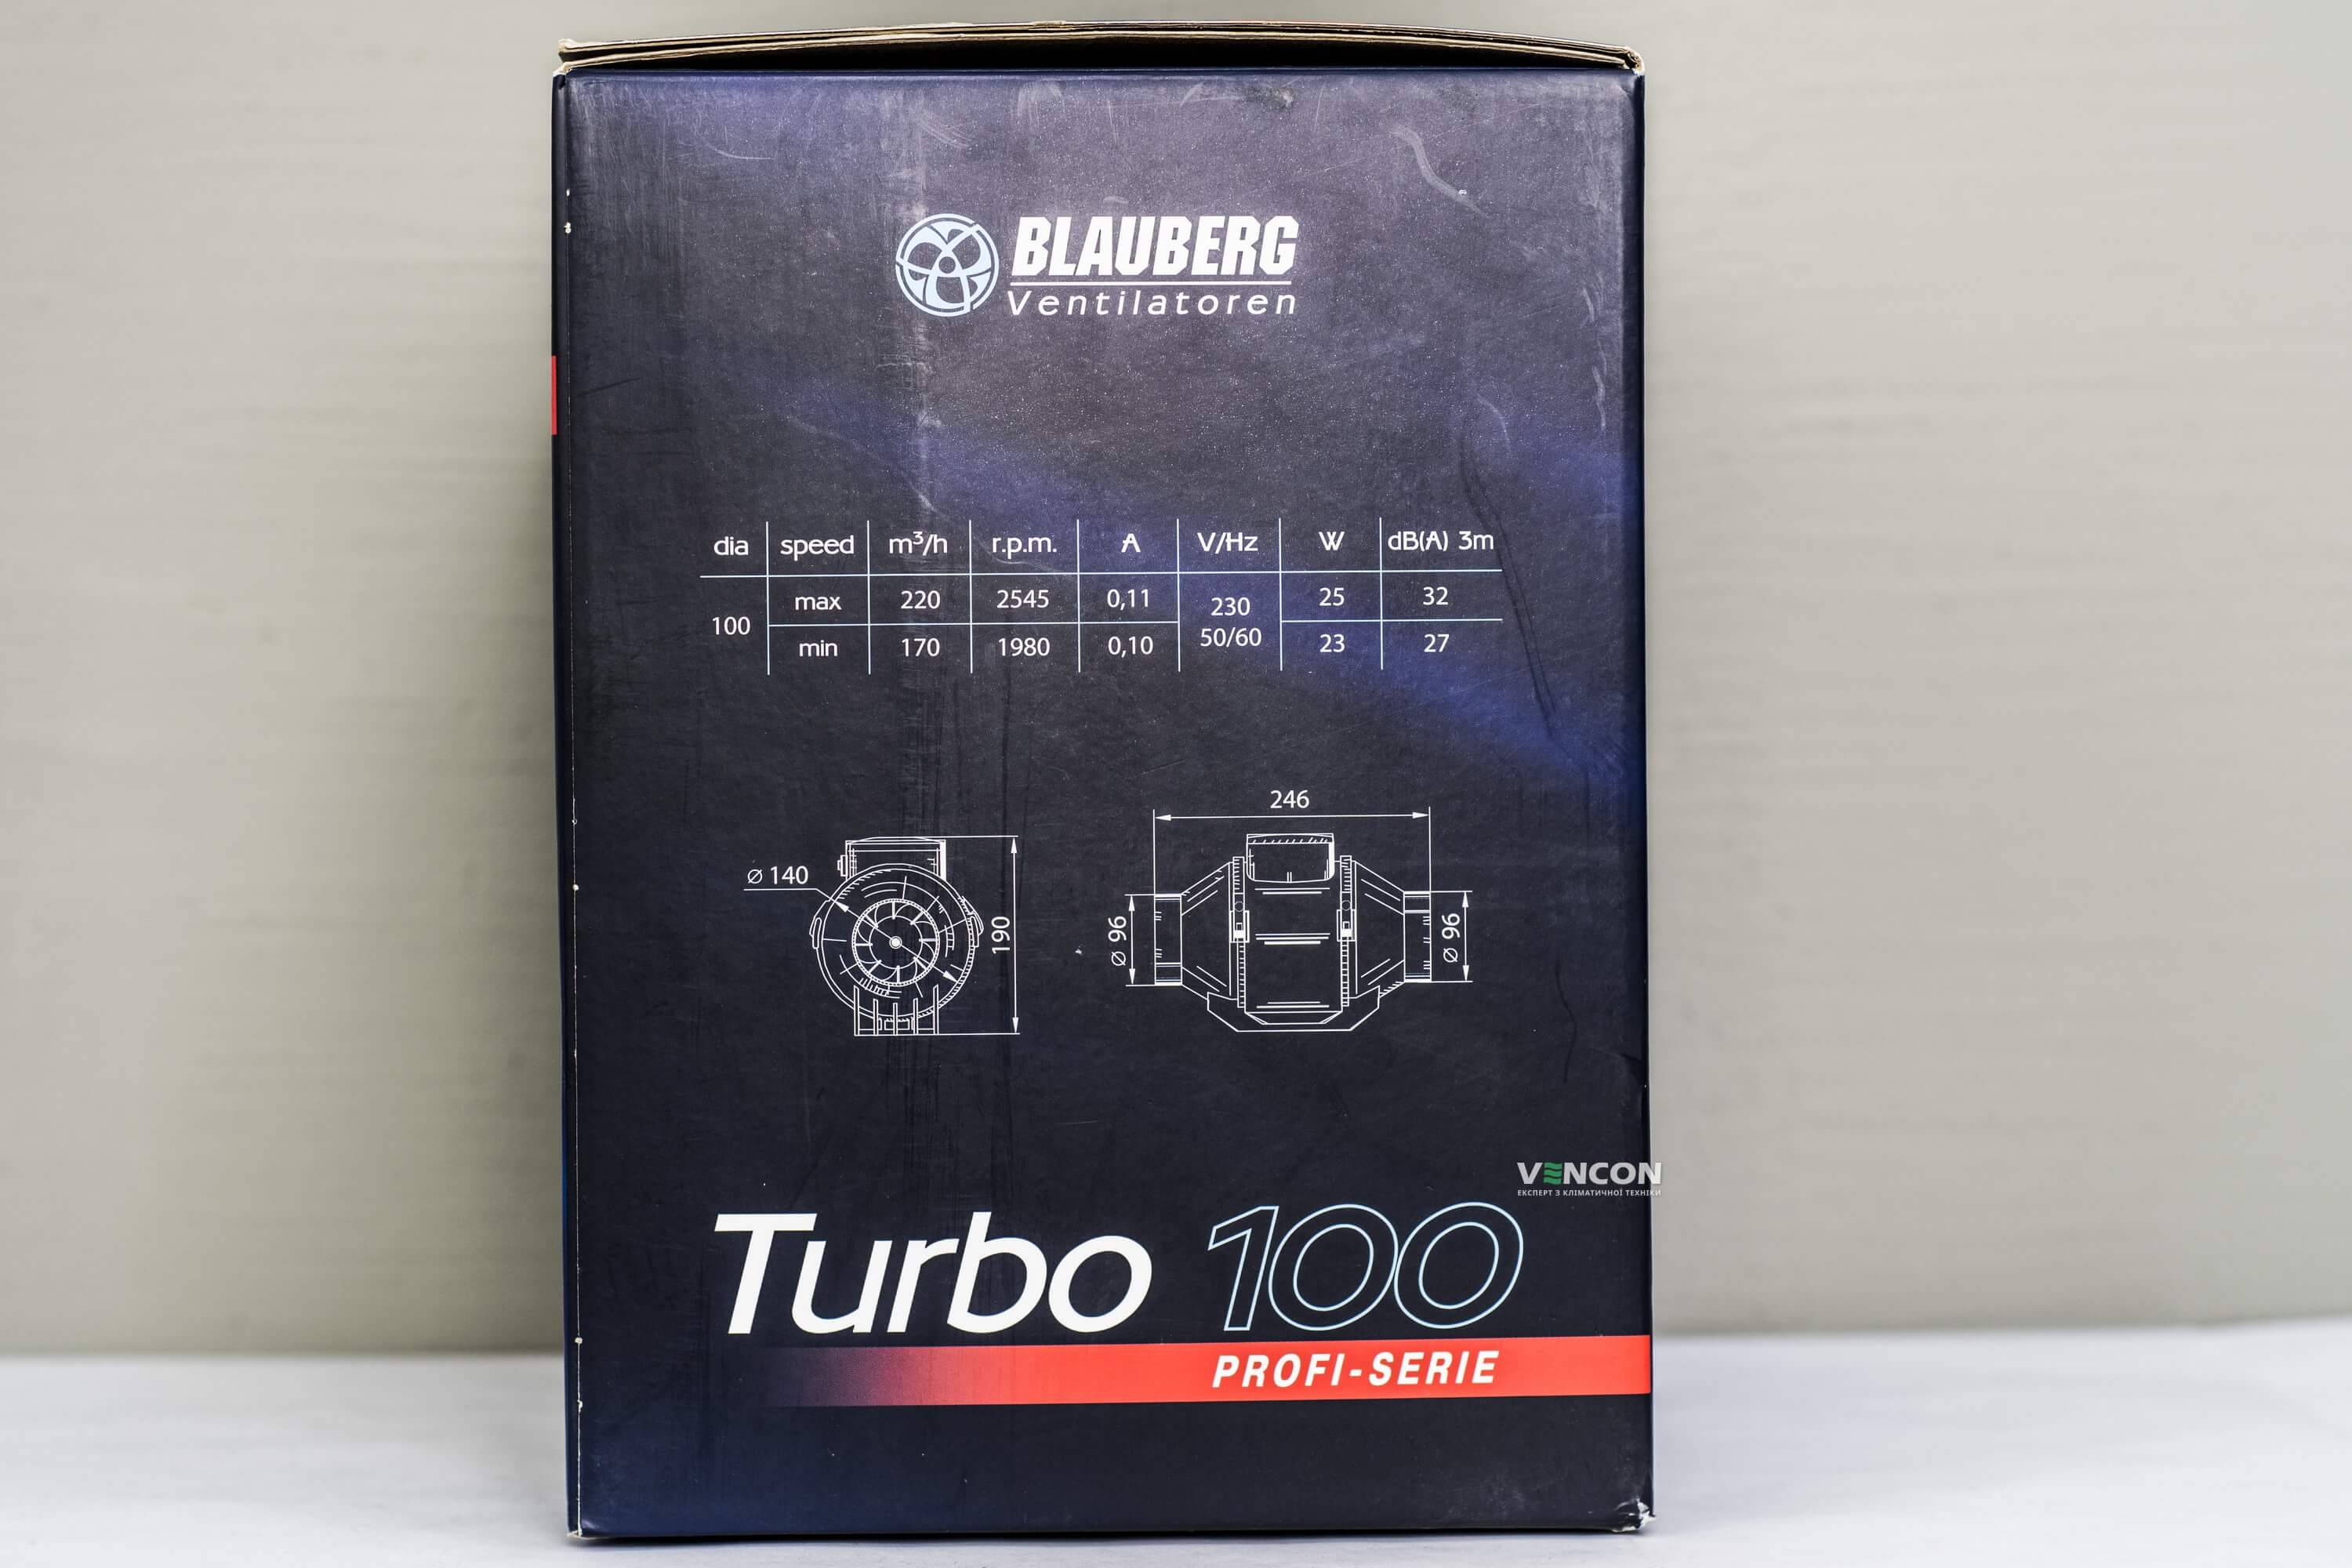 Канальный вентилятор Blauberg Turbo 100 характеристики - фотография 7